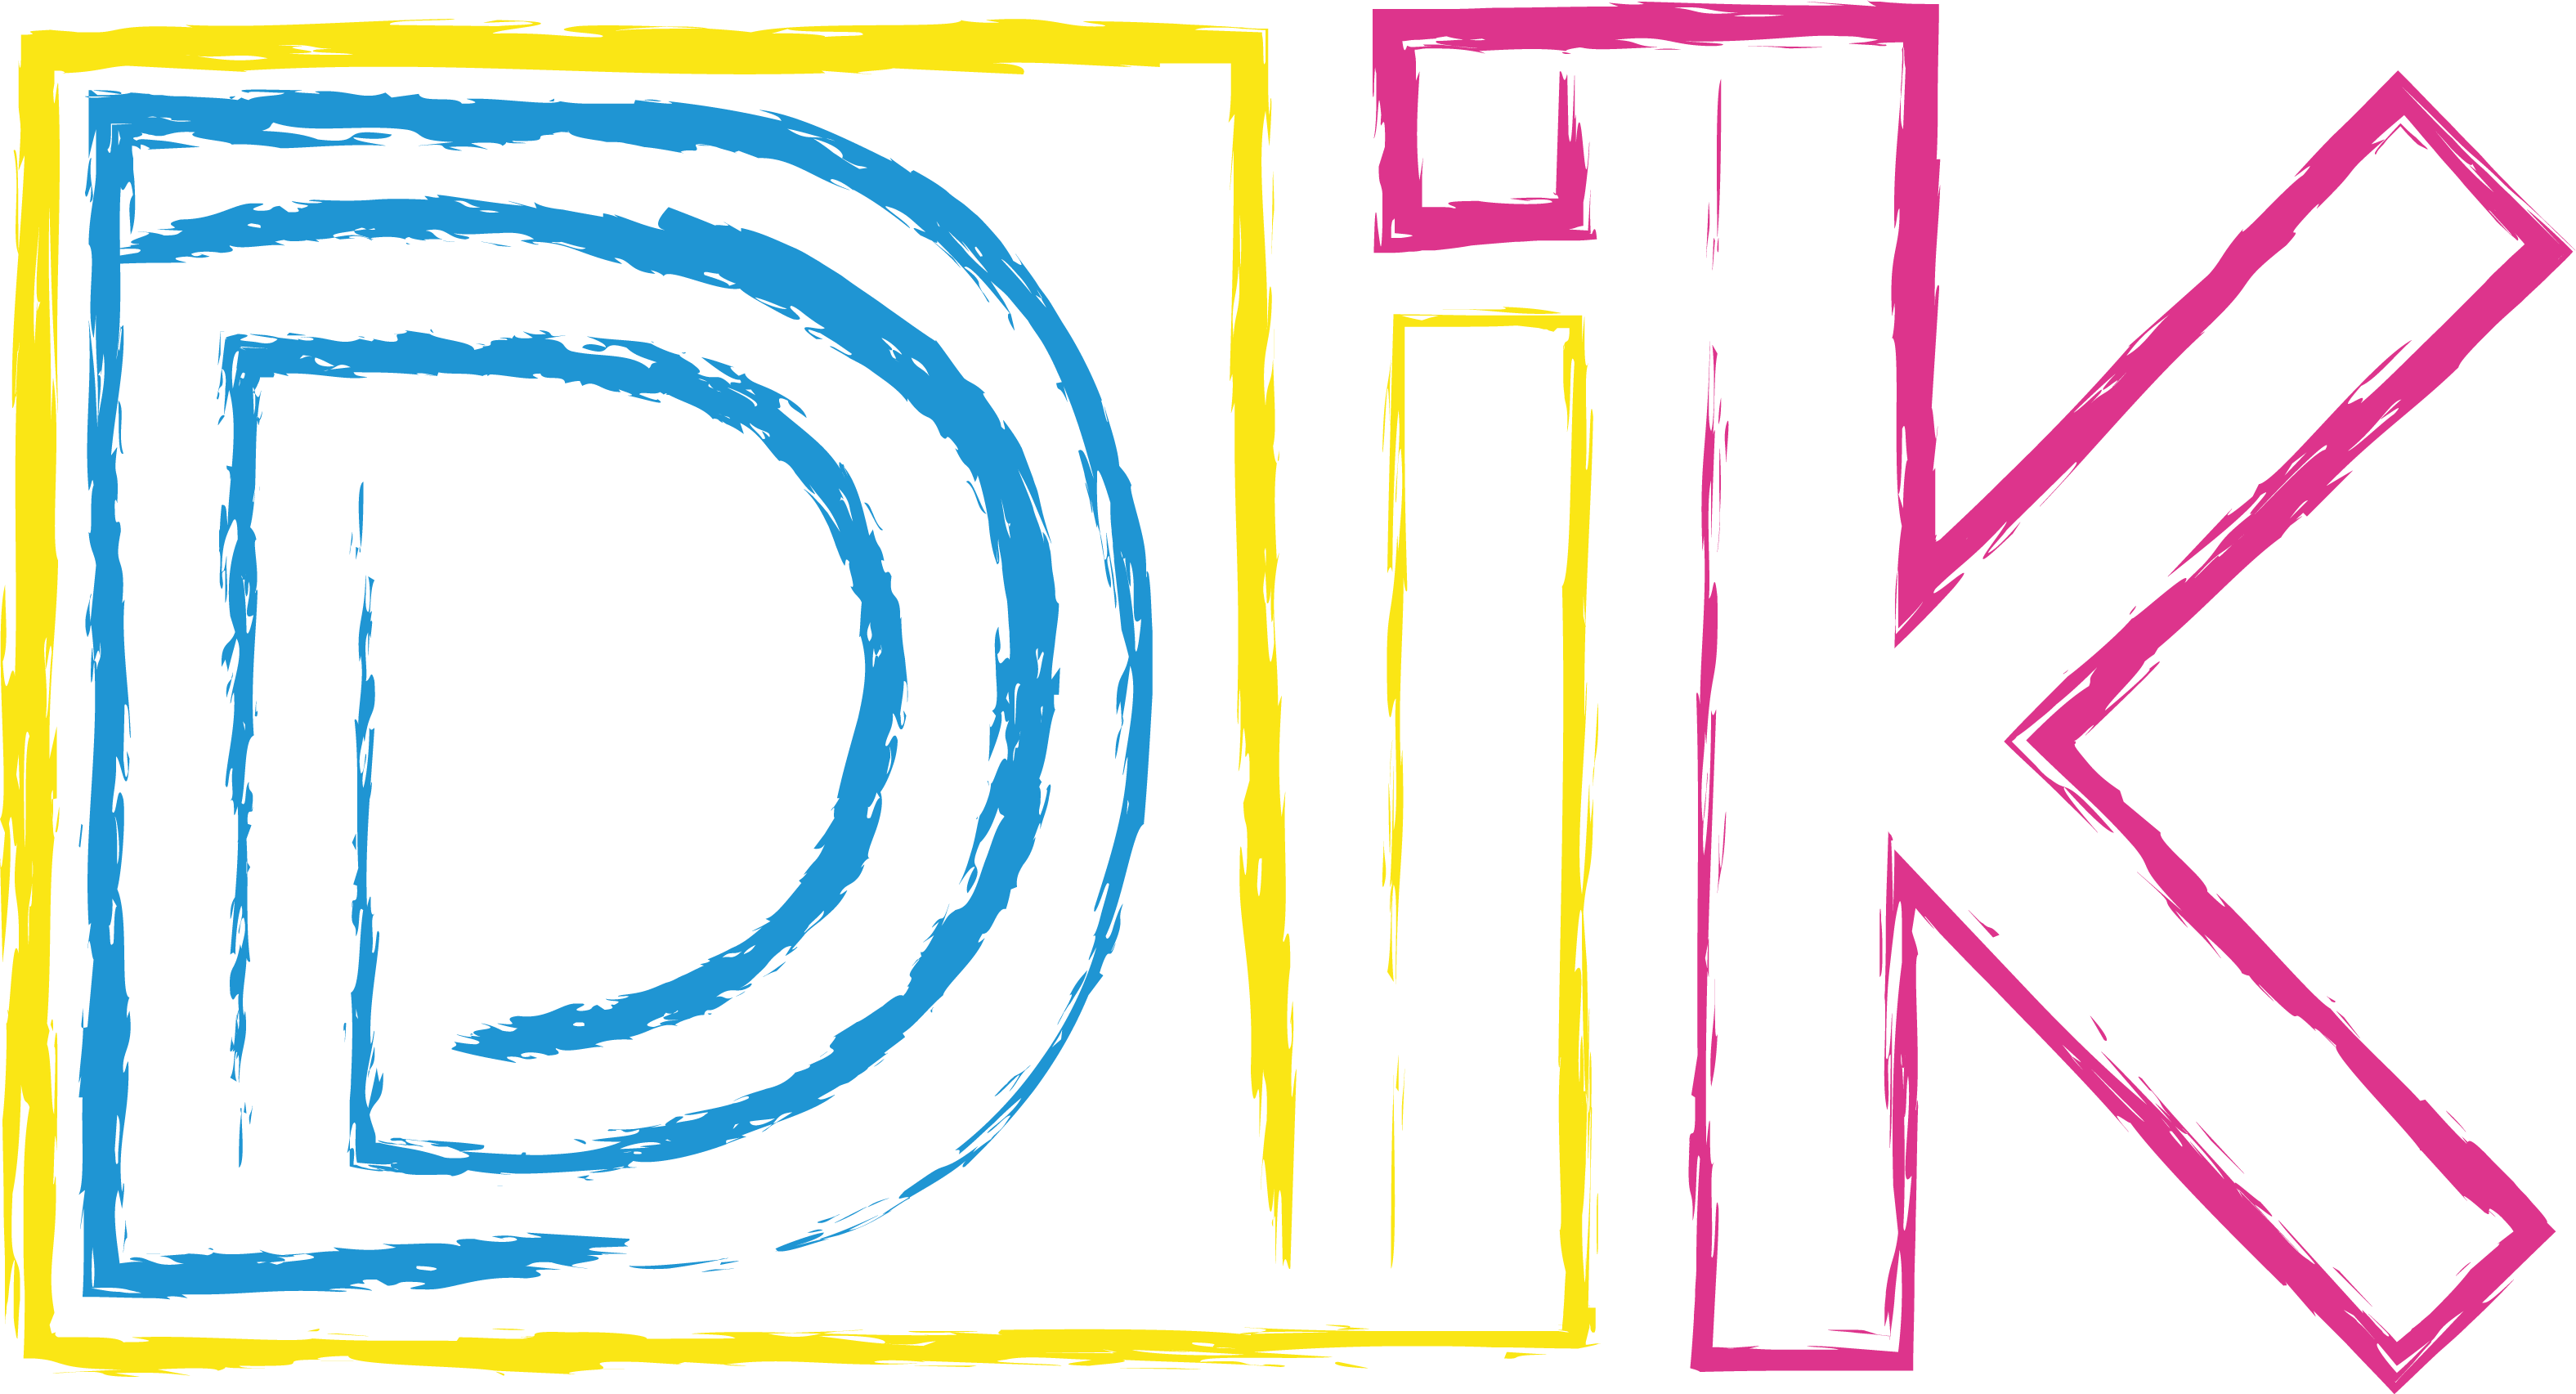 Datakids Logo